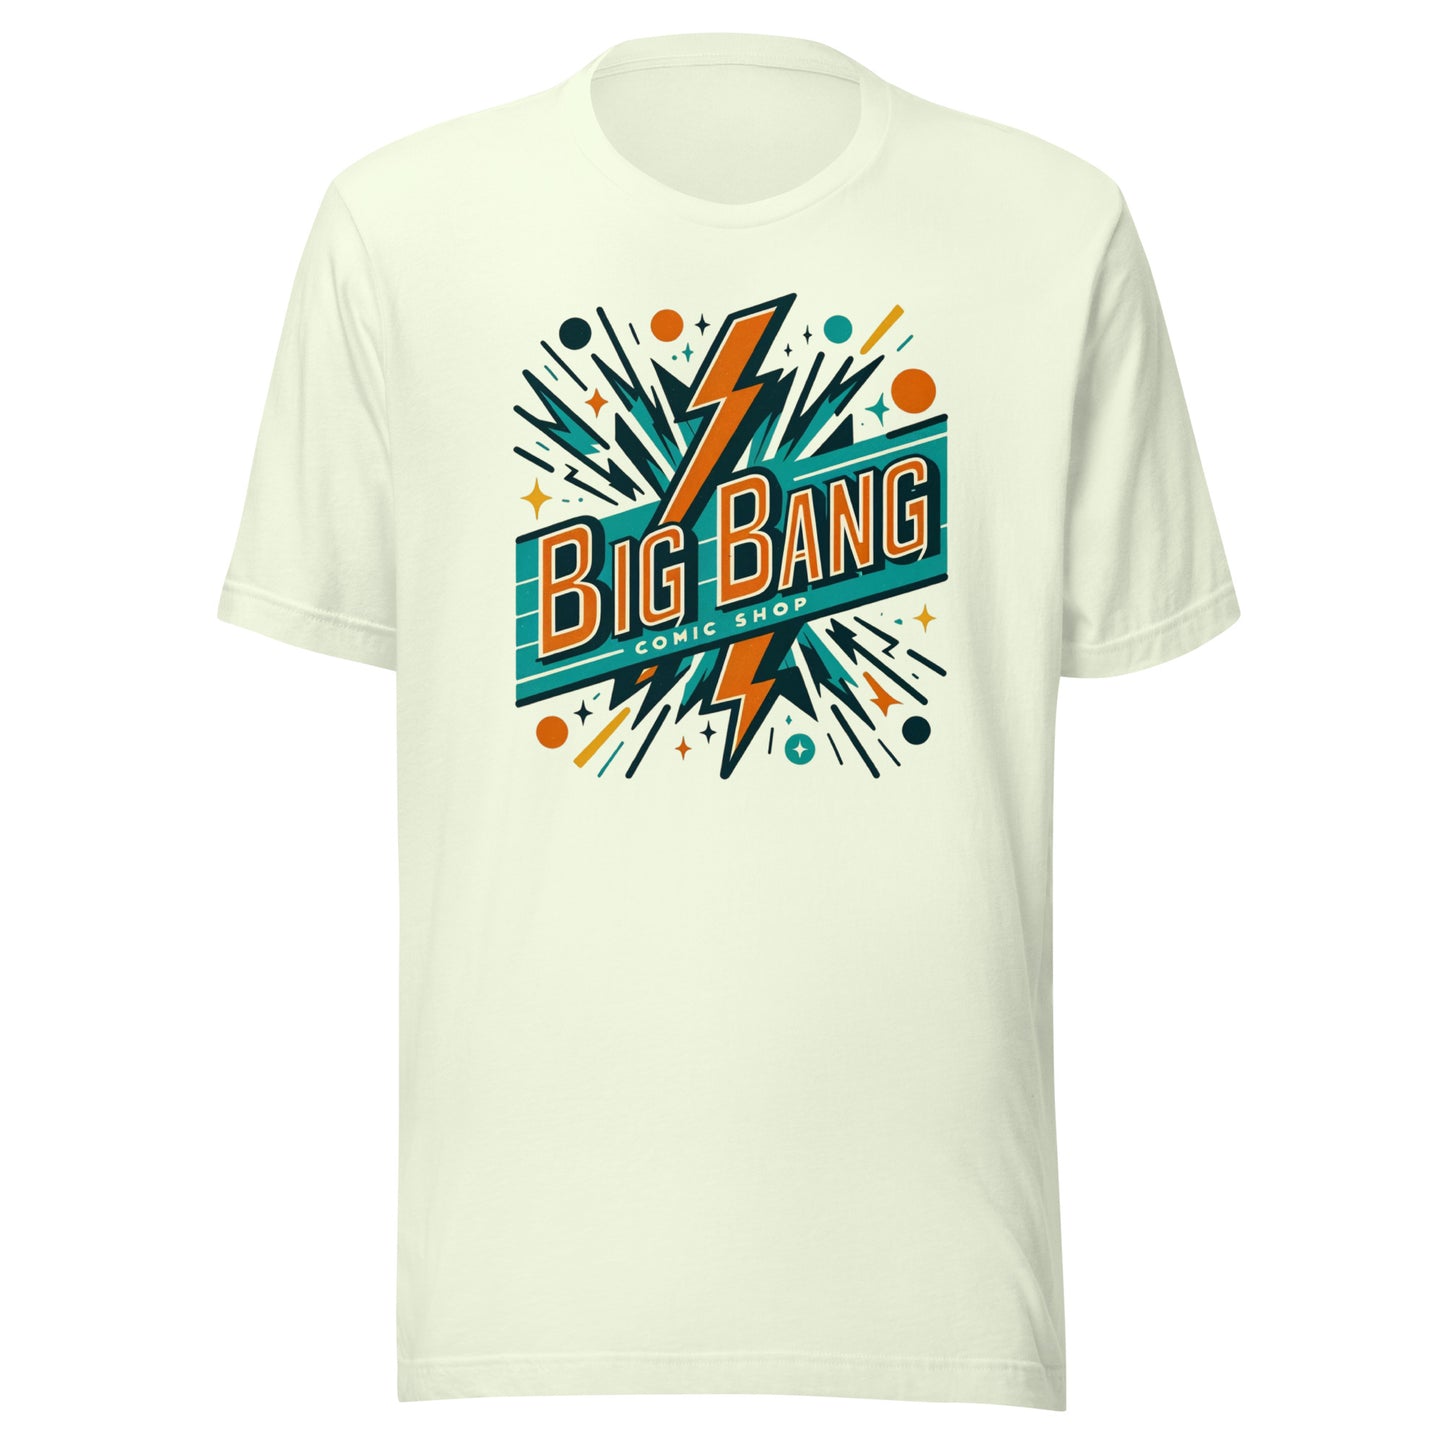 Big Bang Comic Shop - Your Ultimate Destination for Comics Unisex t-shirt